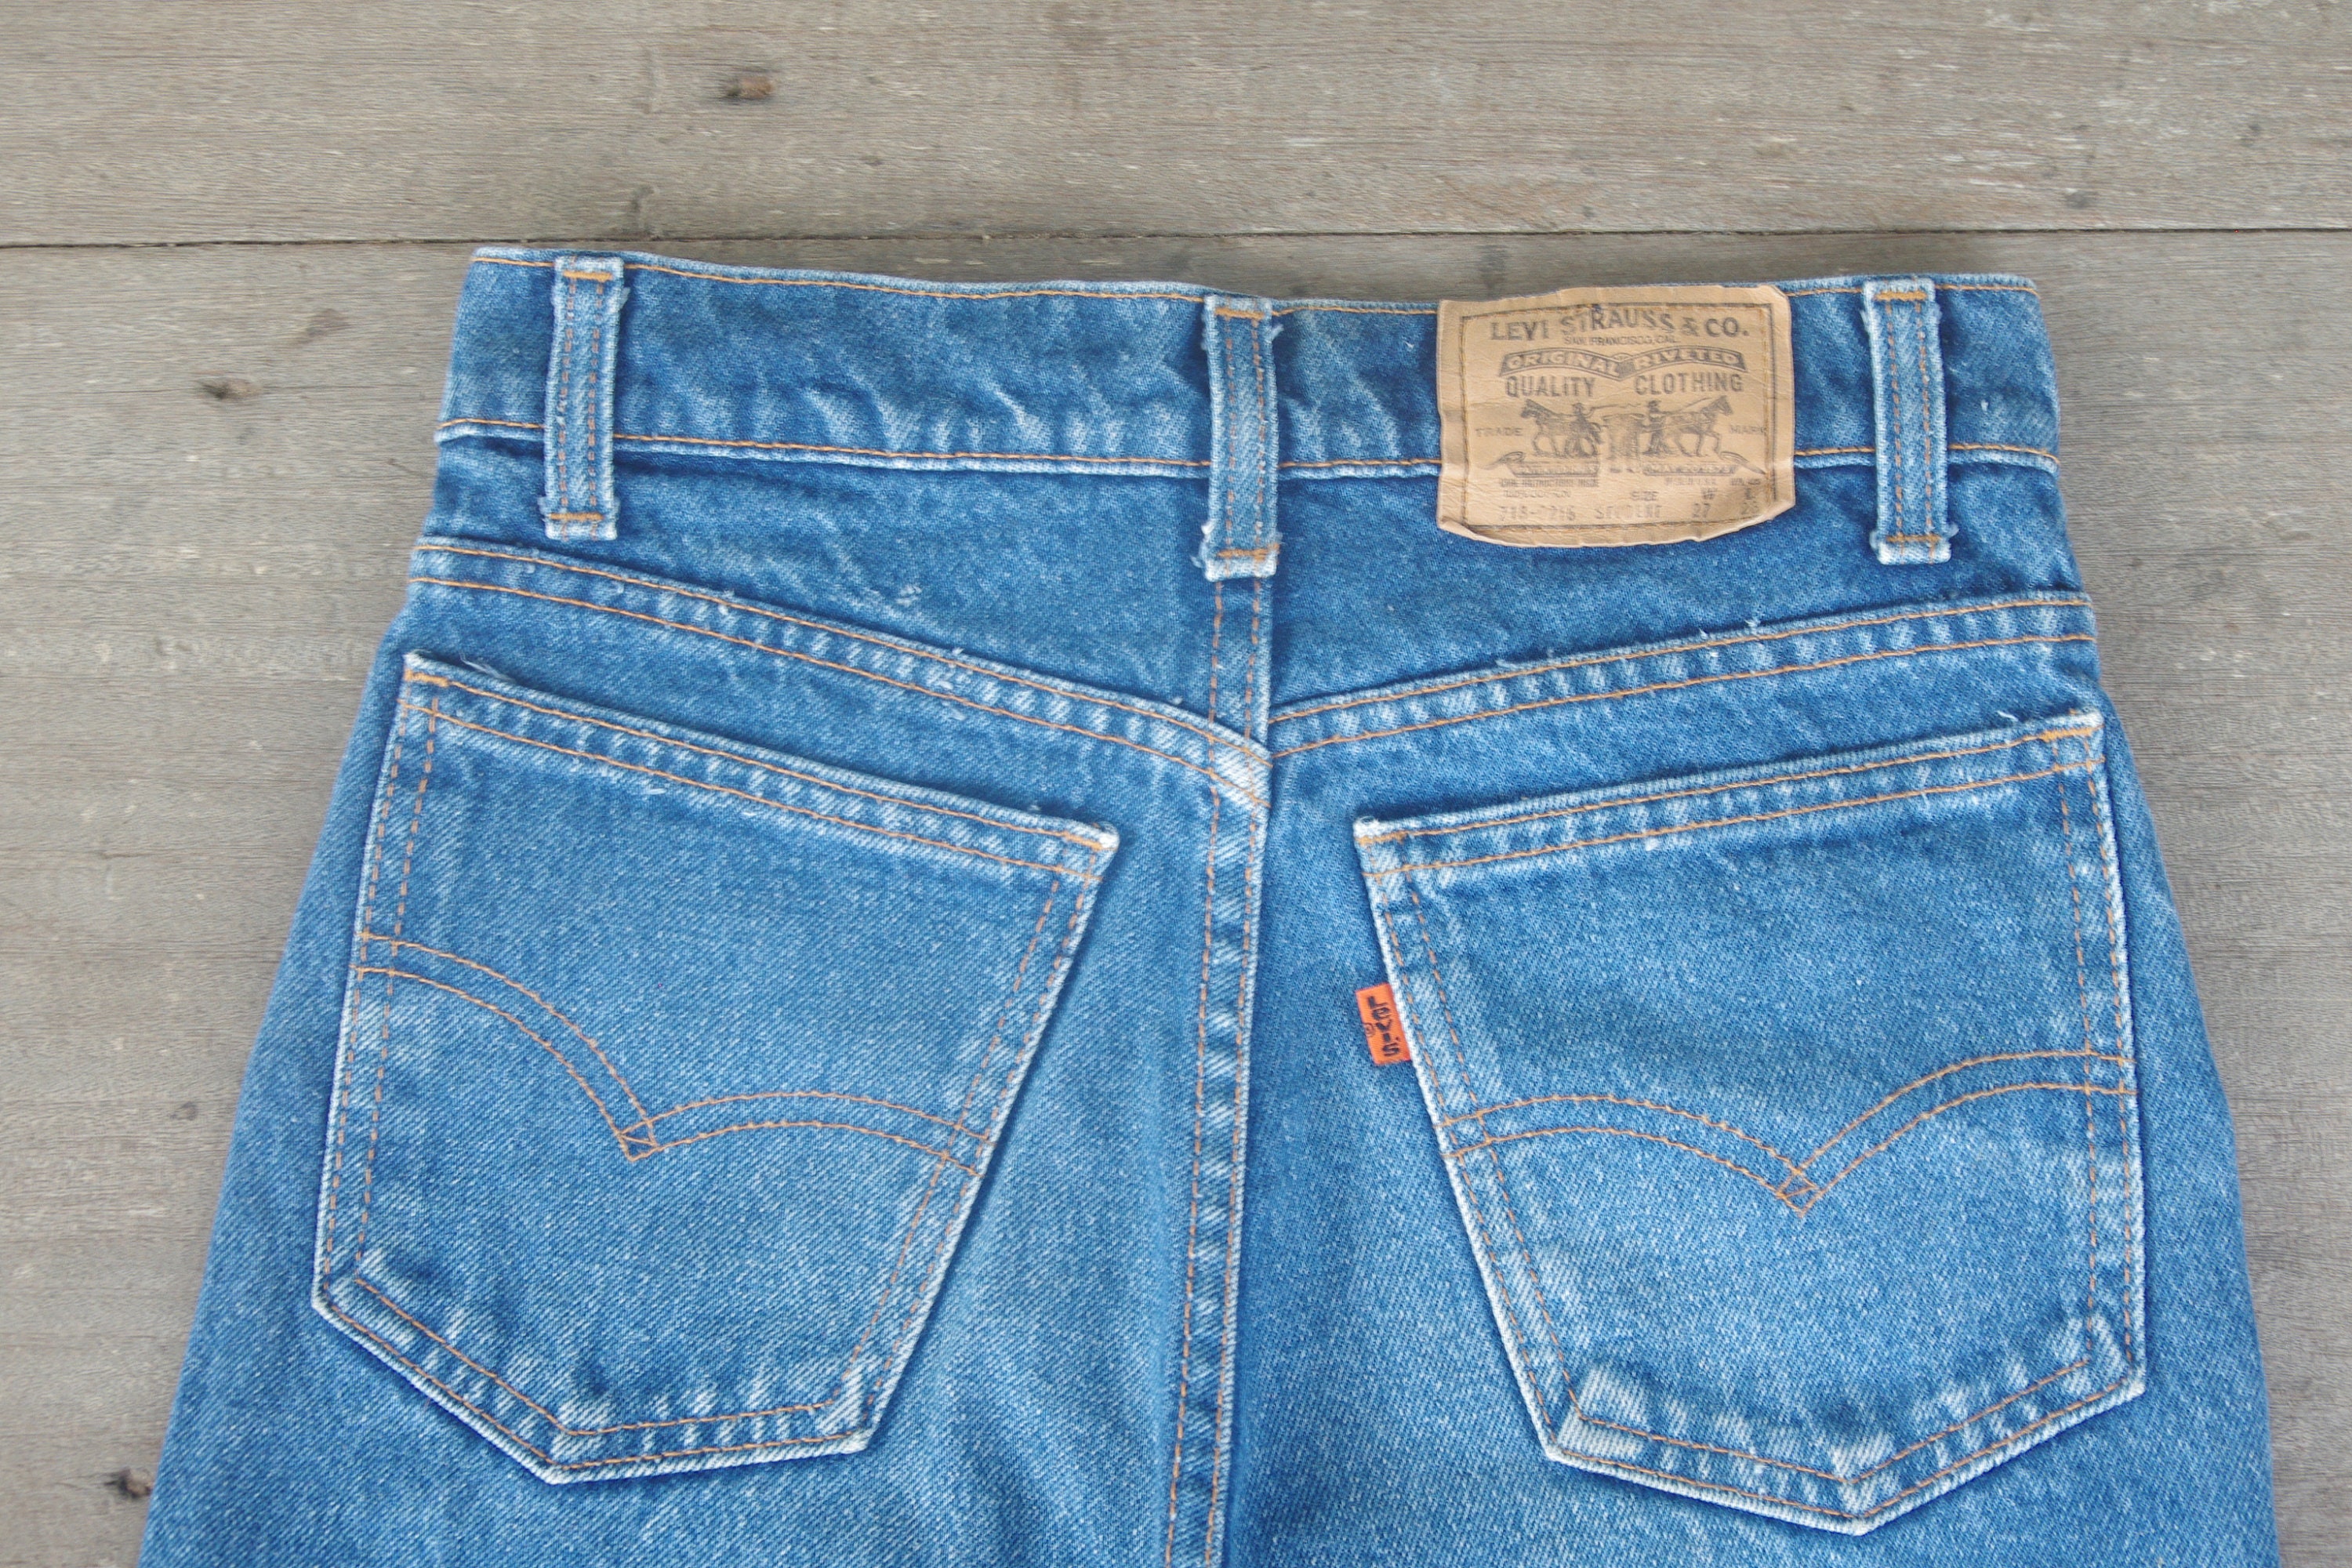 1970s Levis Jeans - Etsy